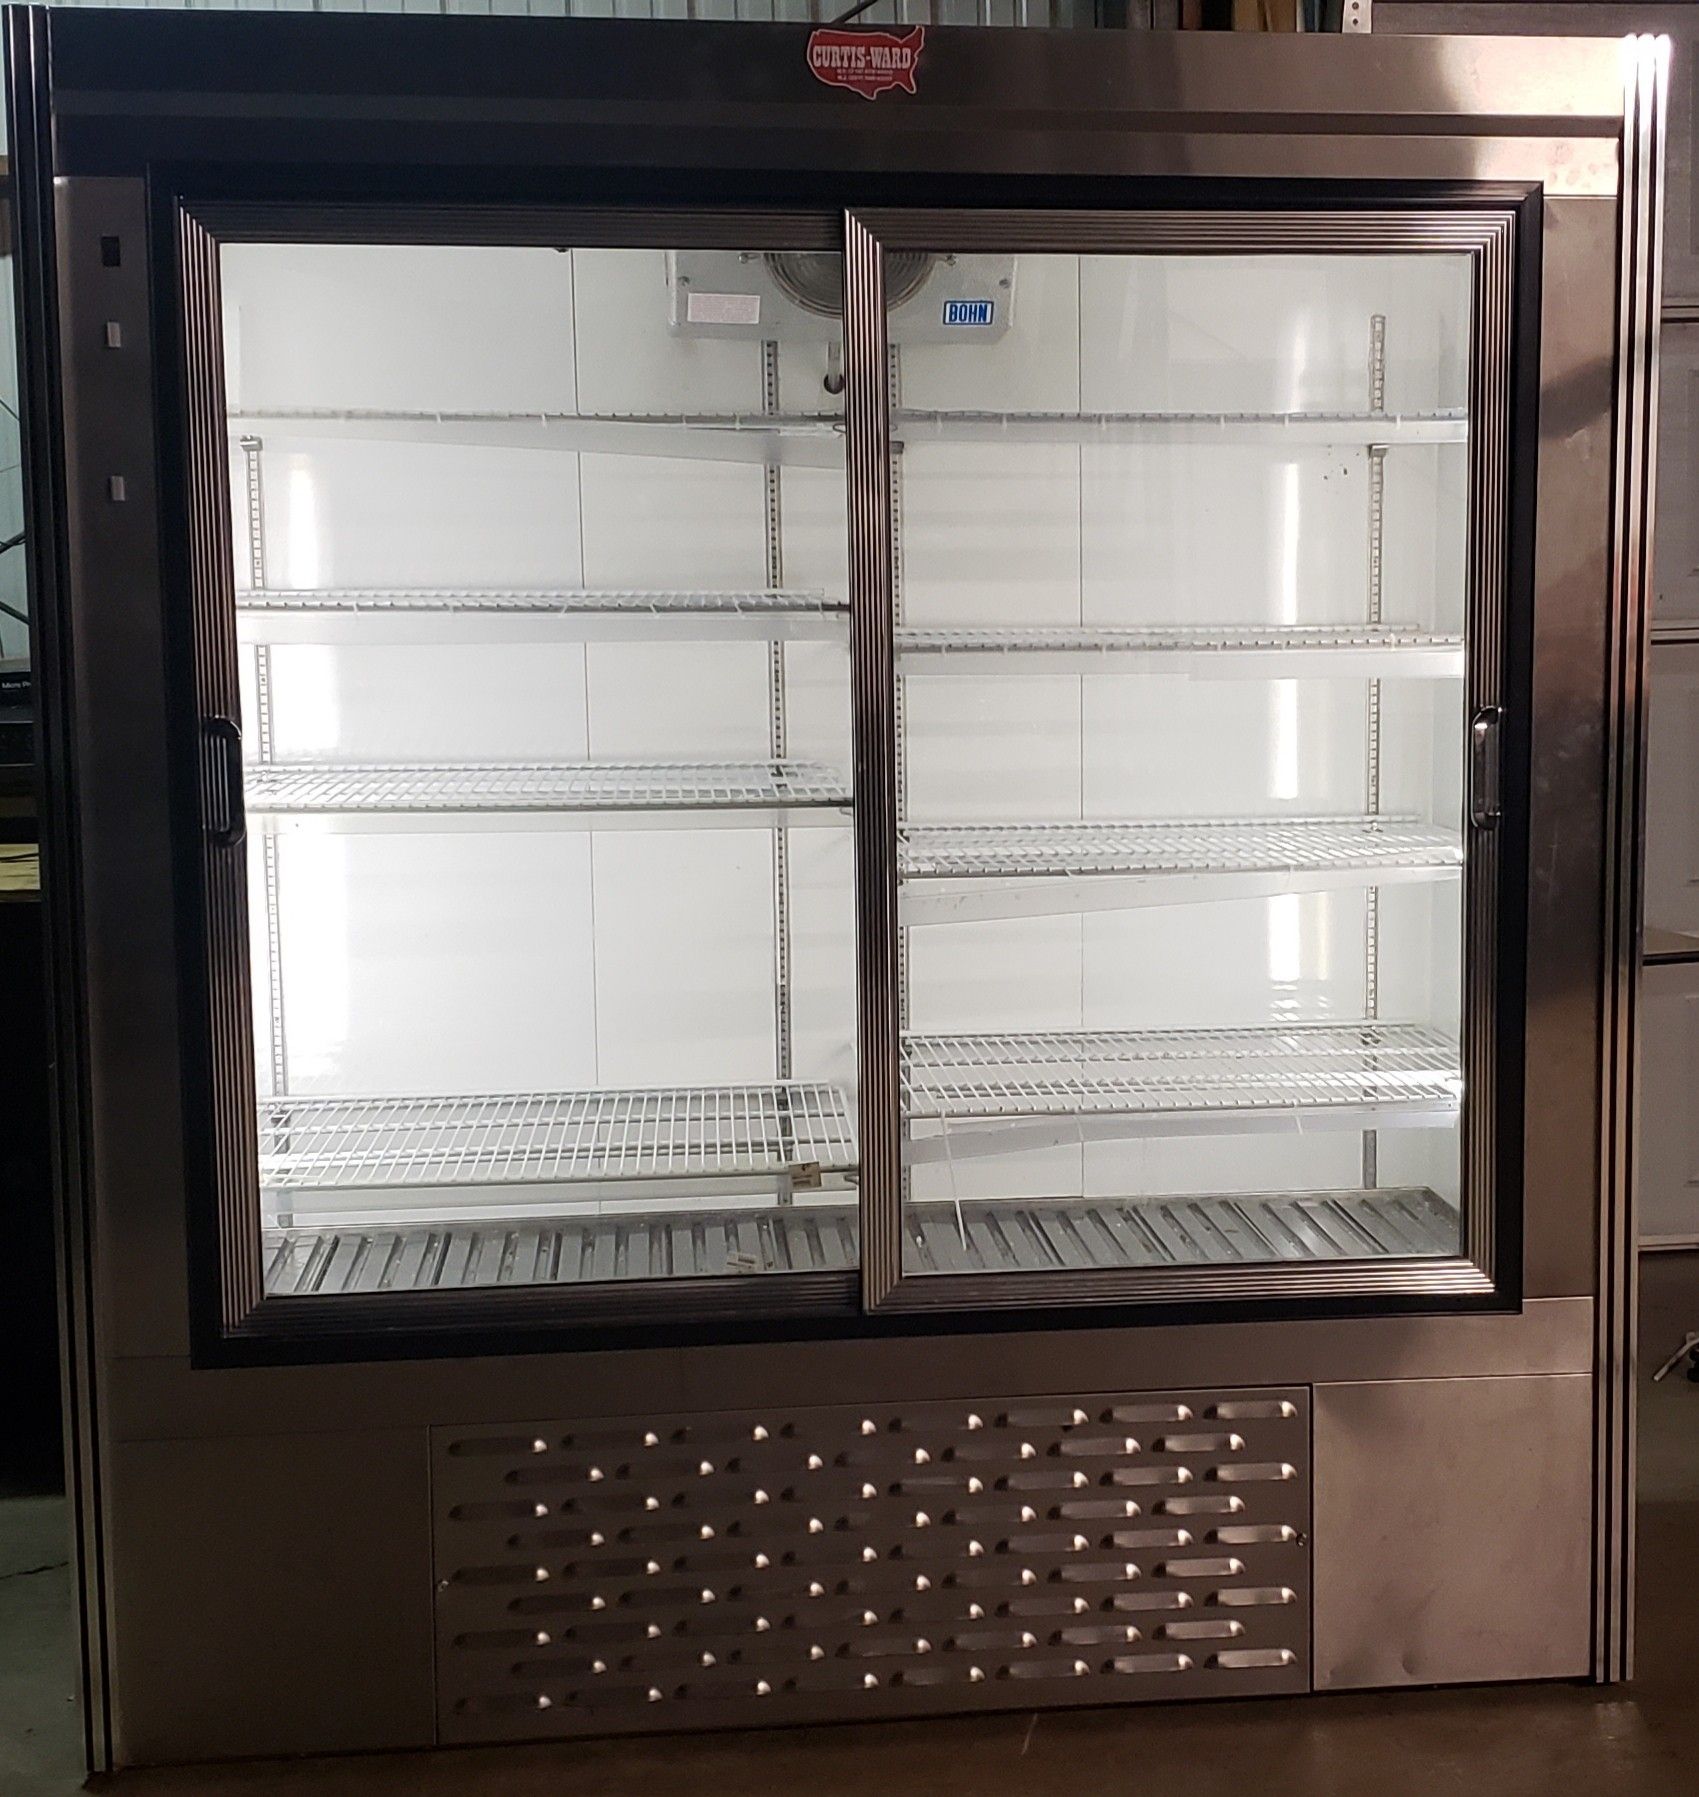 Curtis-Ward Commercial Refrigerator